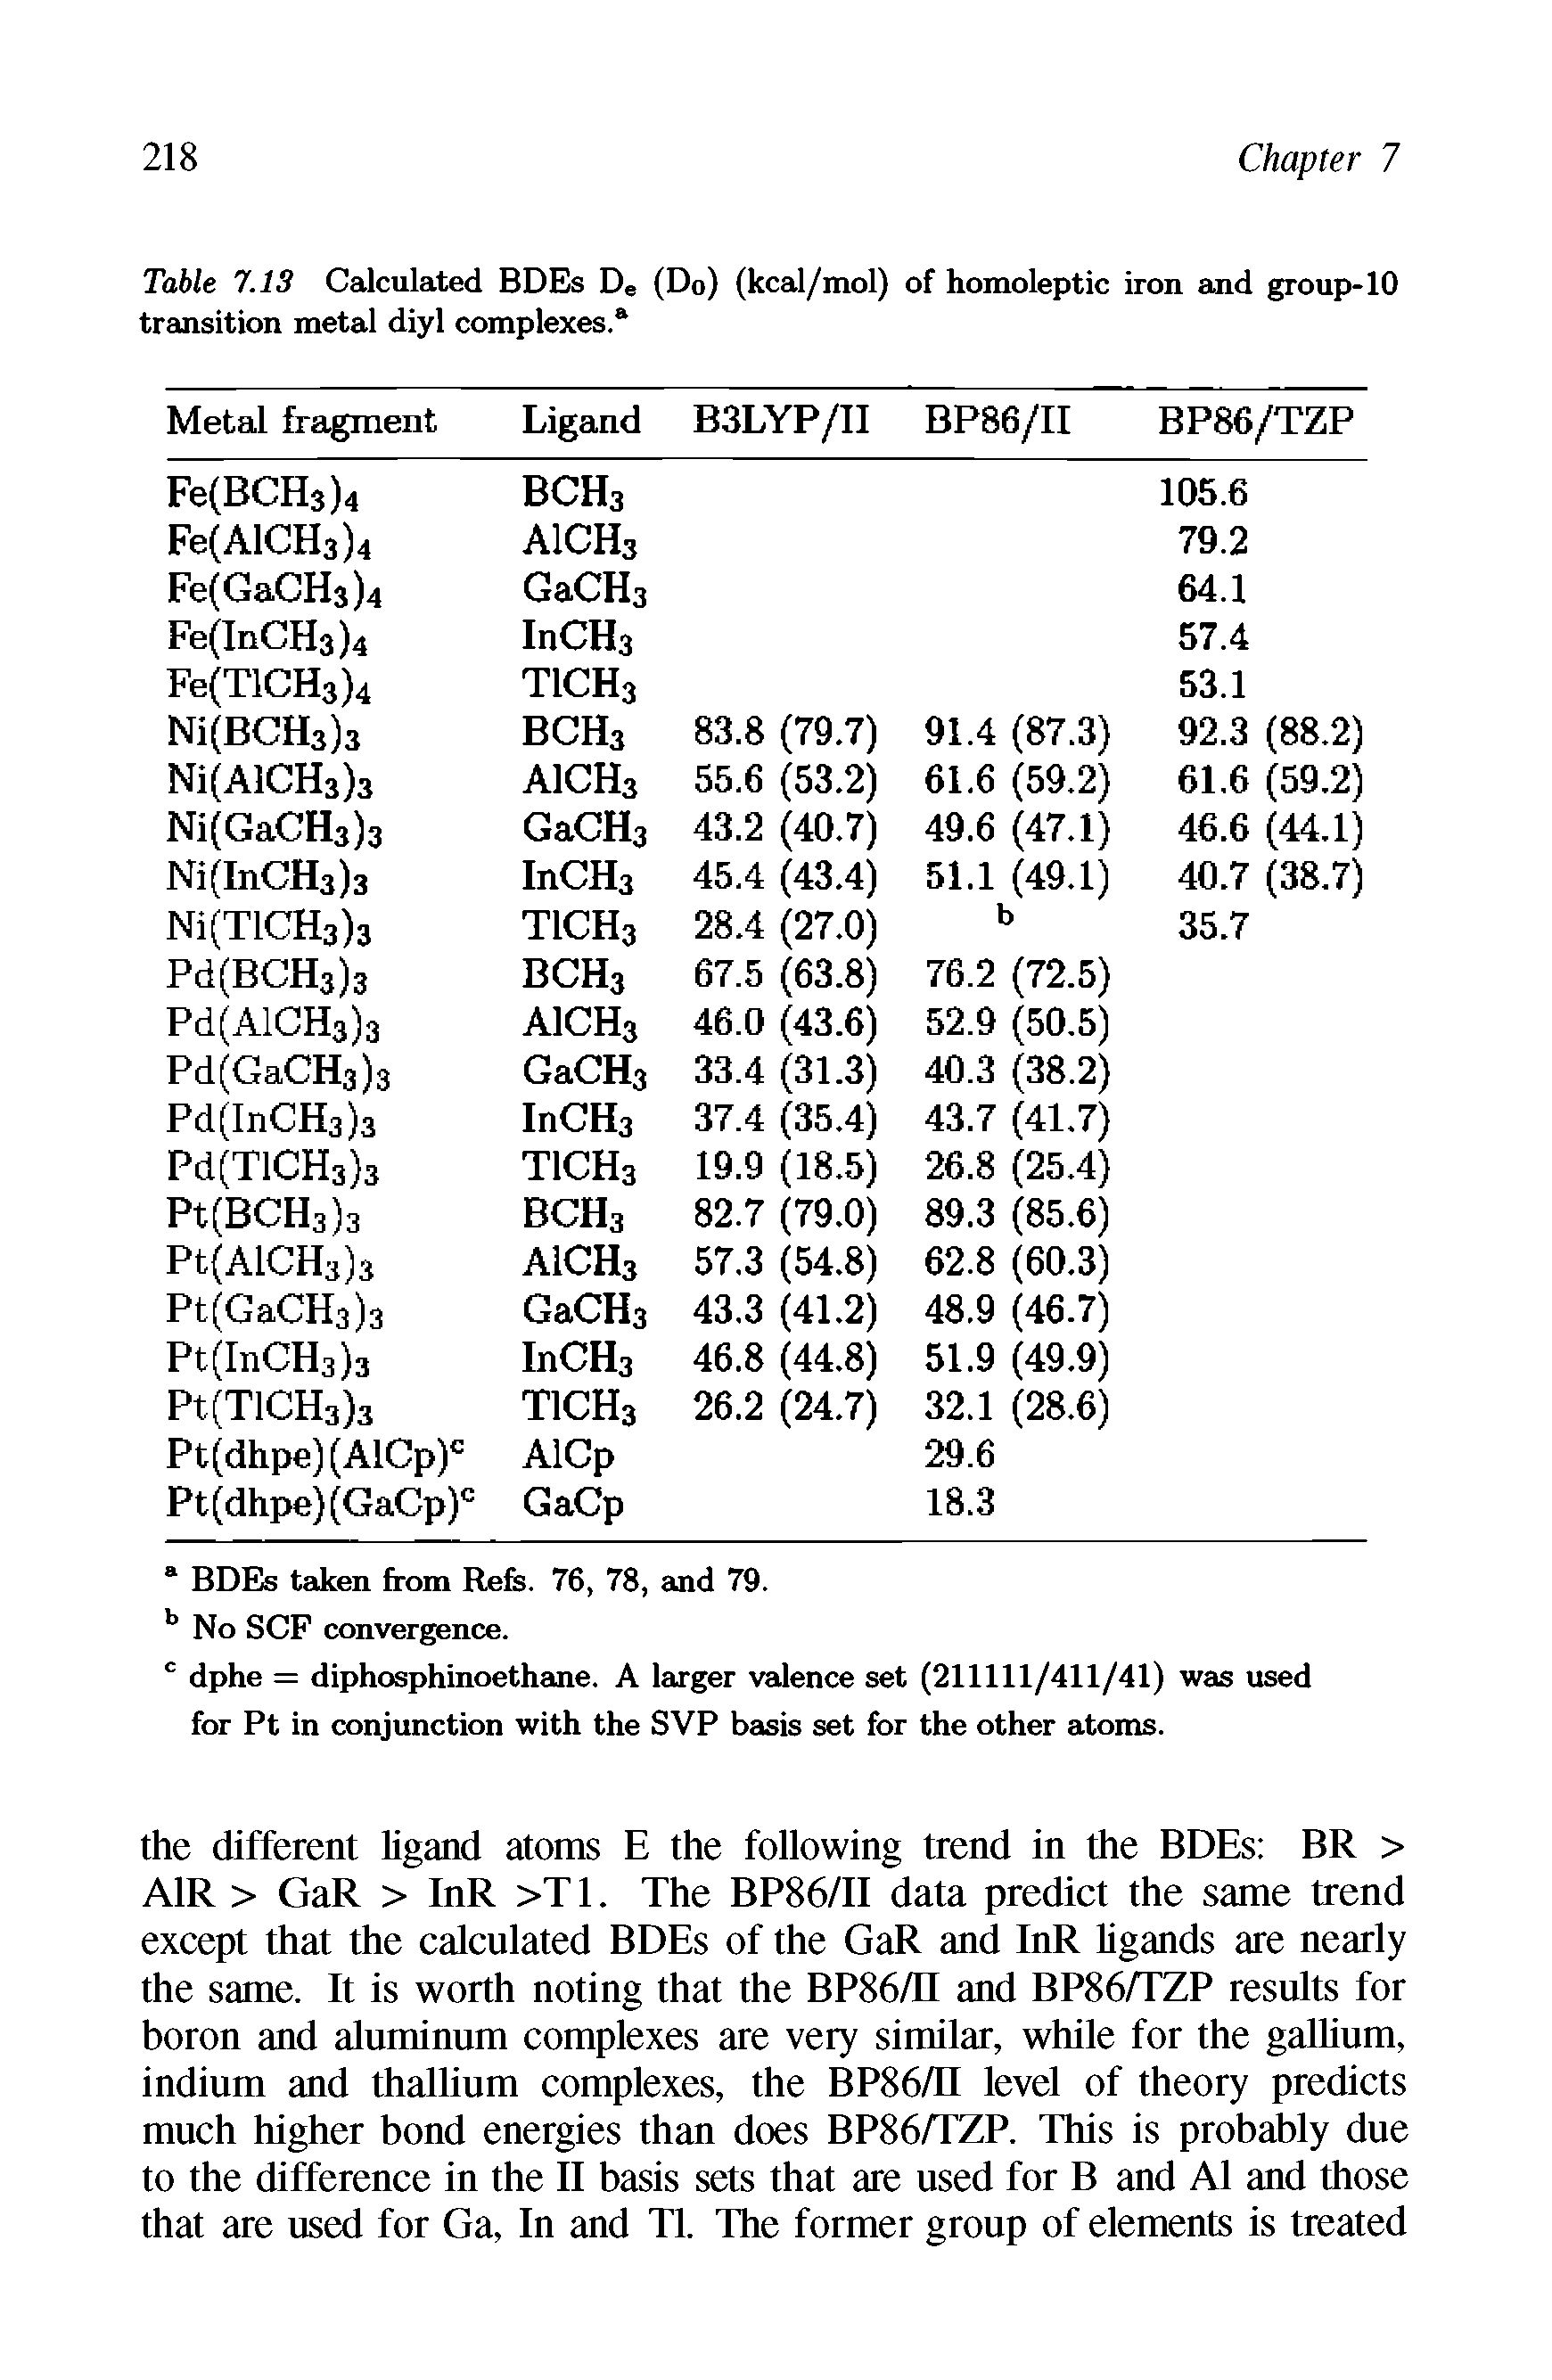 Table 7.13 Calculated BDEs De (Do) (kcal/mol) of homoleptic iron and group-10 transition metal diyl complexes. ...